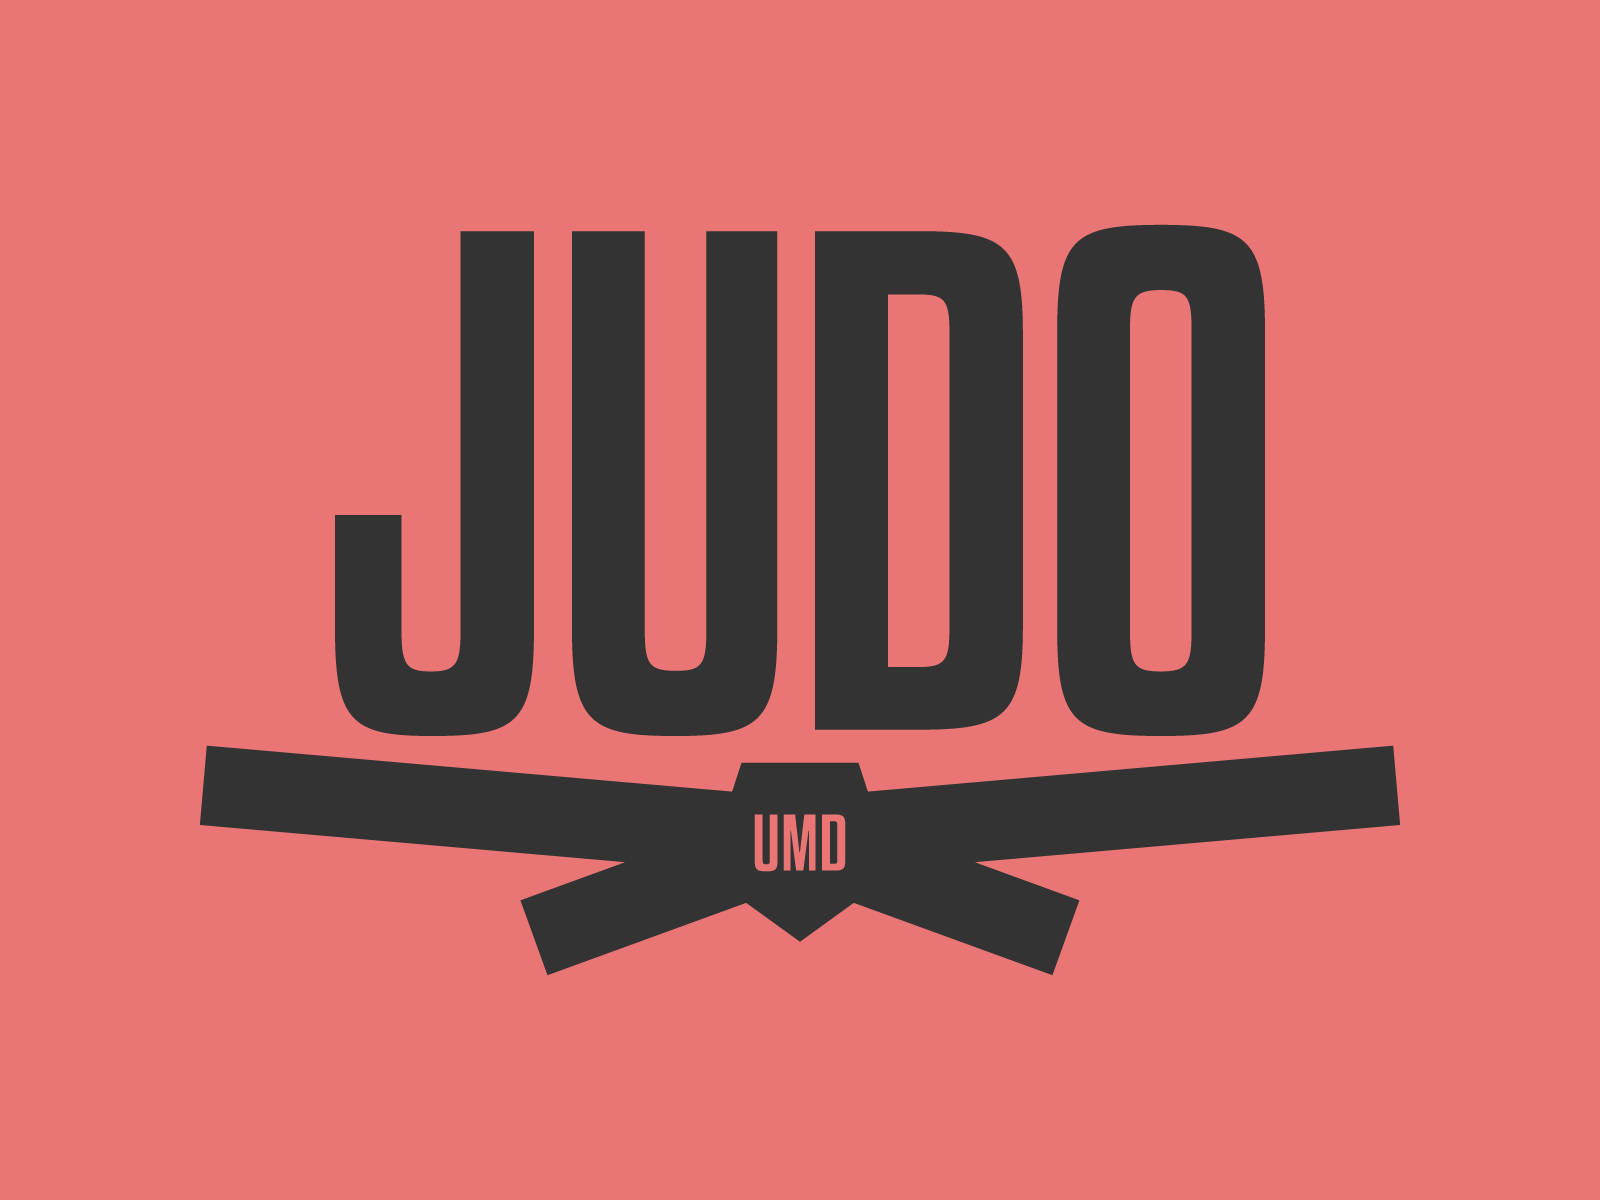 Judo Word Art Background